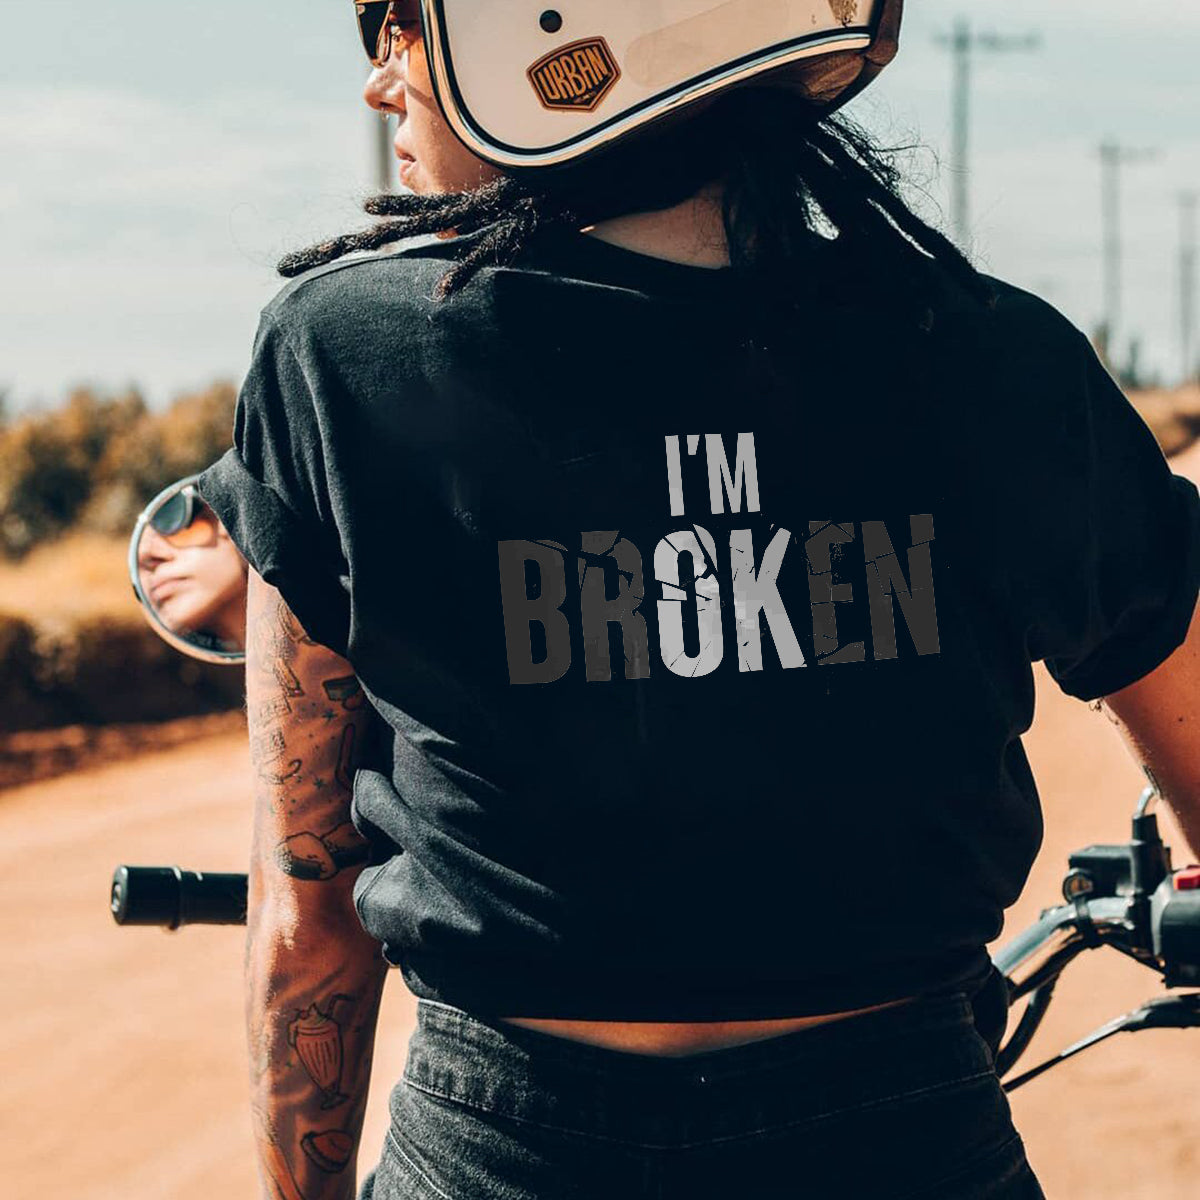 I'M Broken Slogan Women T-Shirt - chicyea